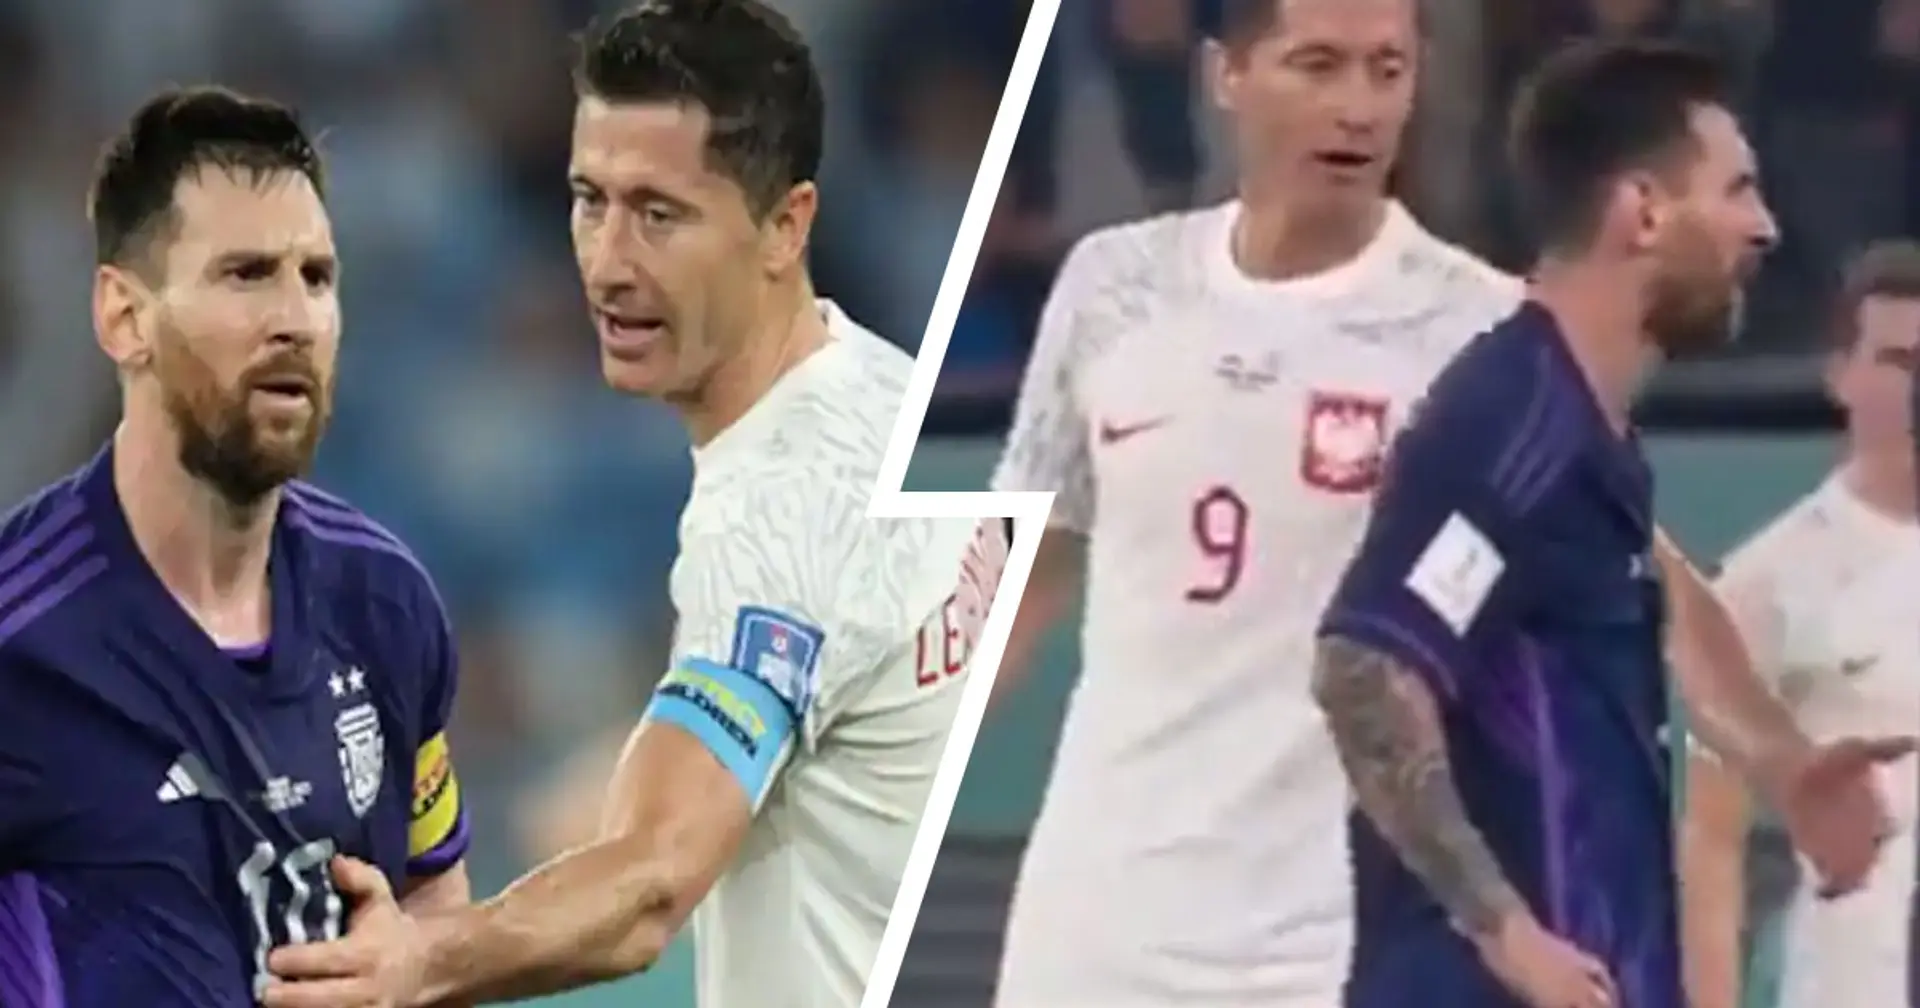 Caught on camera: Messi ignores Lewandowski's handshake gesture in World Cup clash